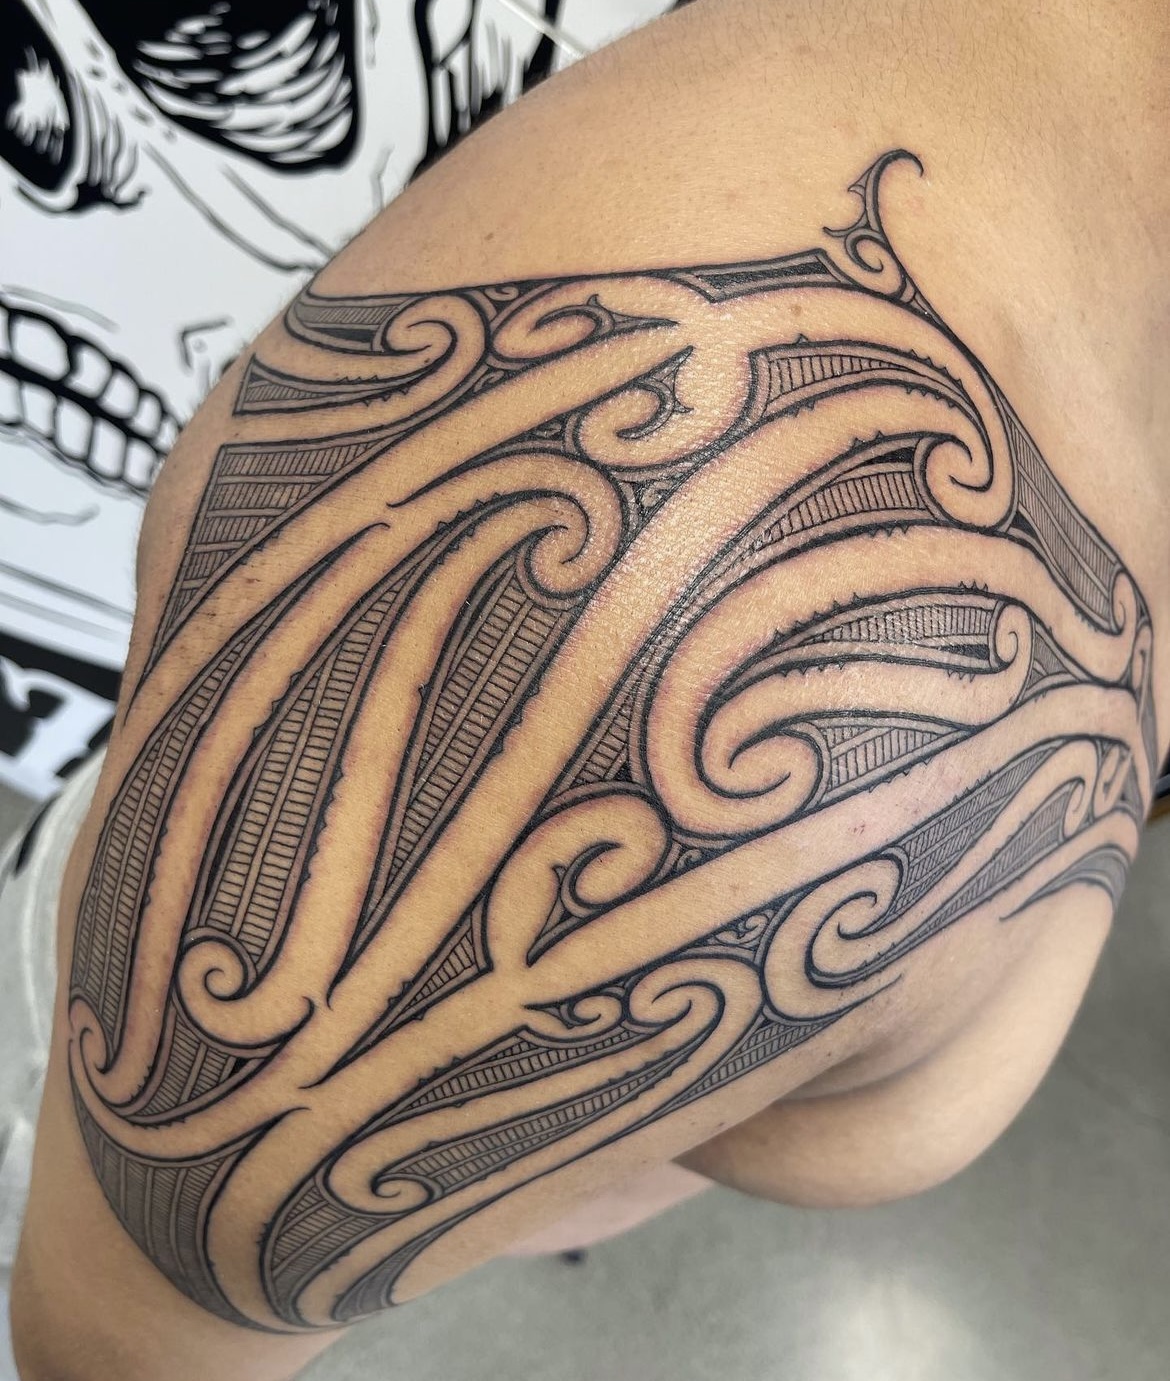 Evolution tattoo studio NZ